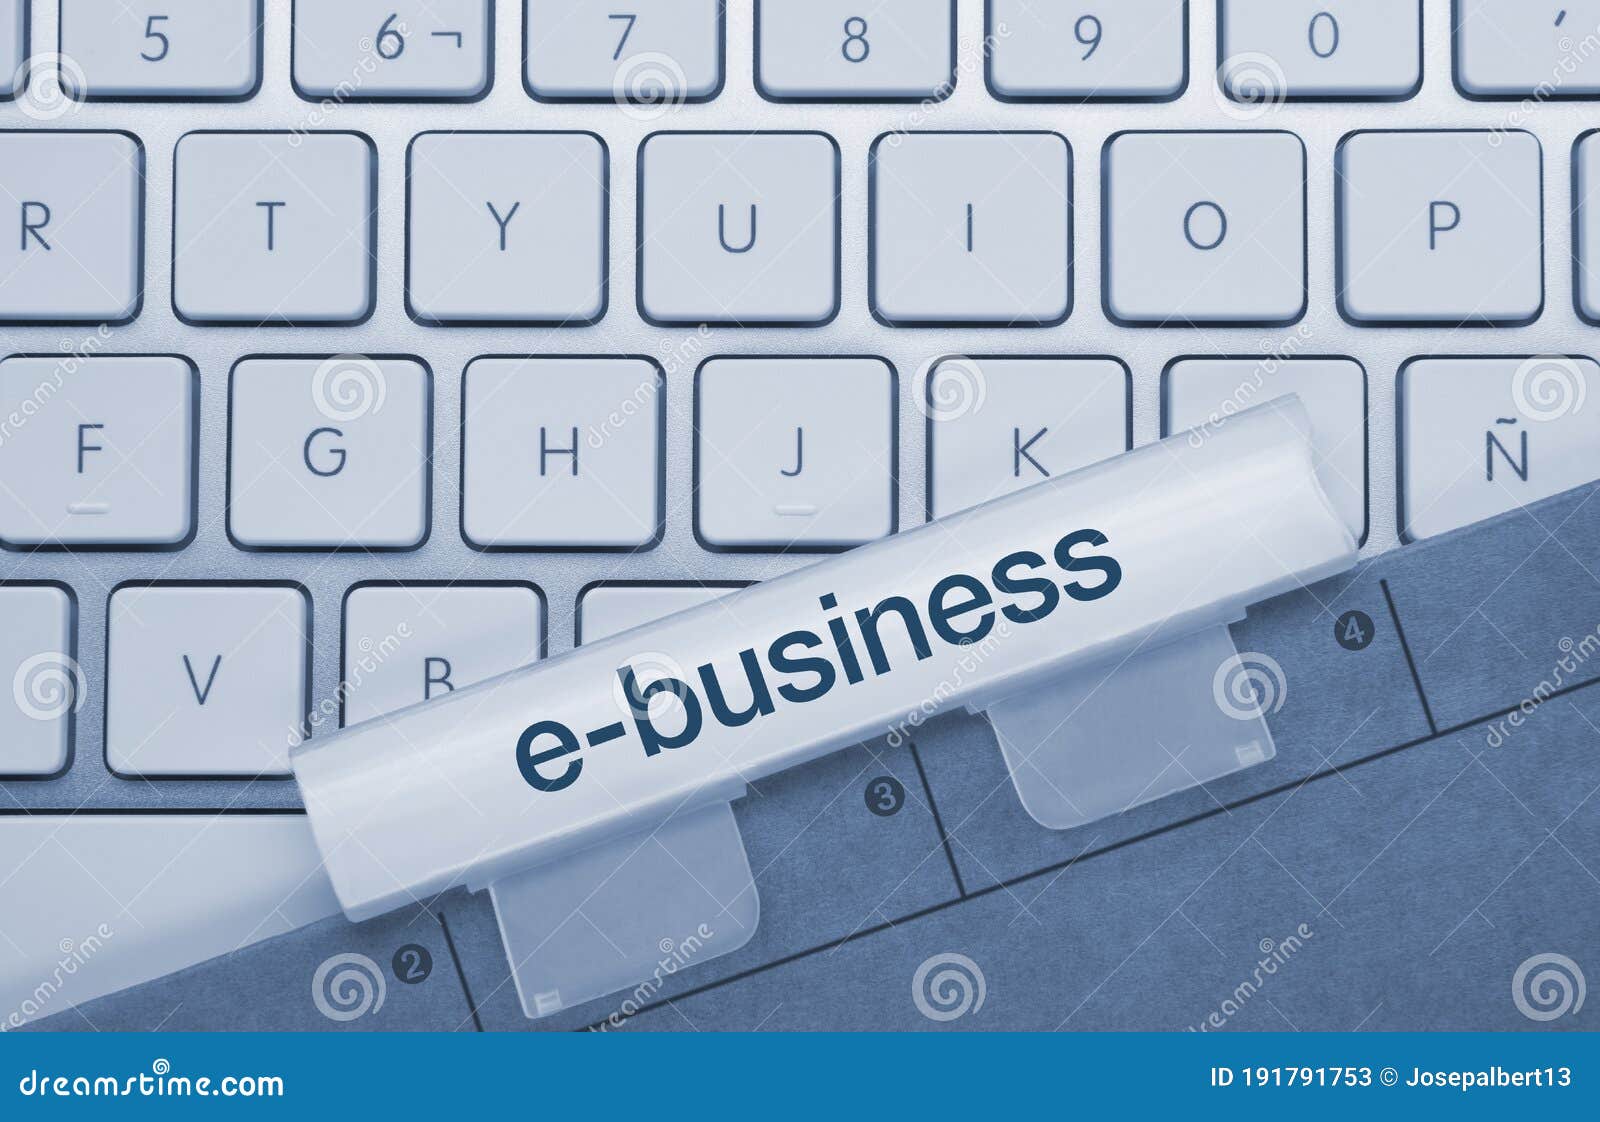 e-business - inscription on blue keyboard key